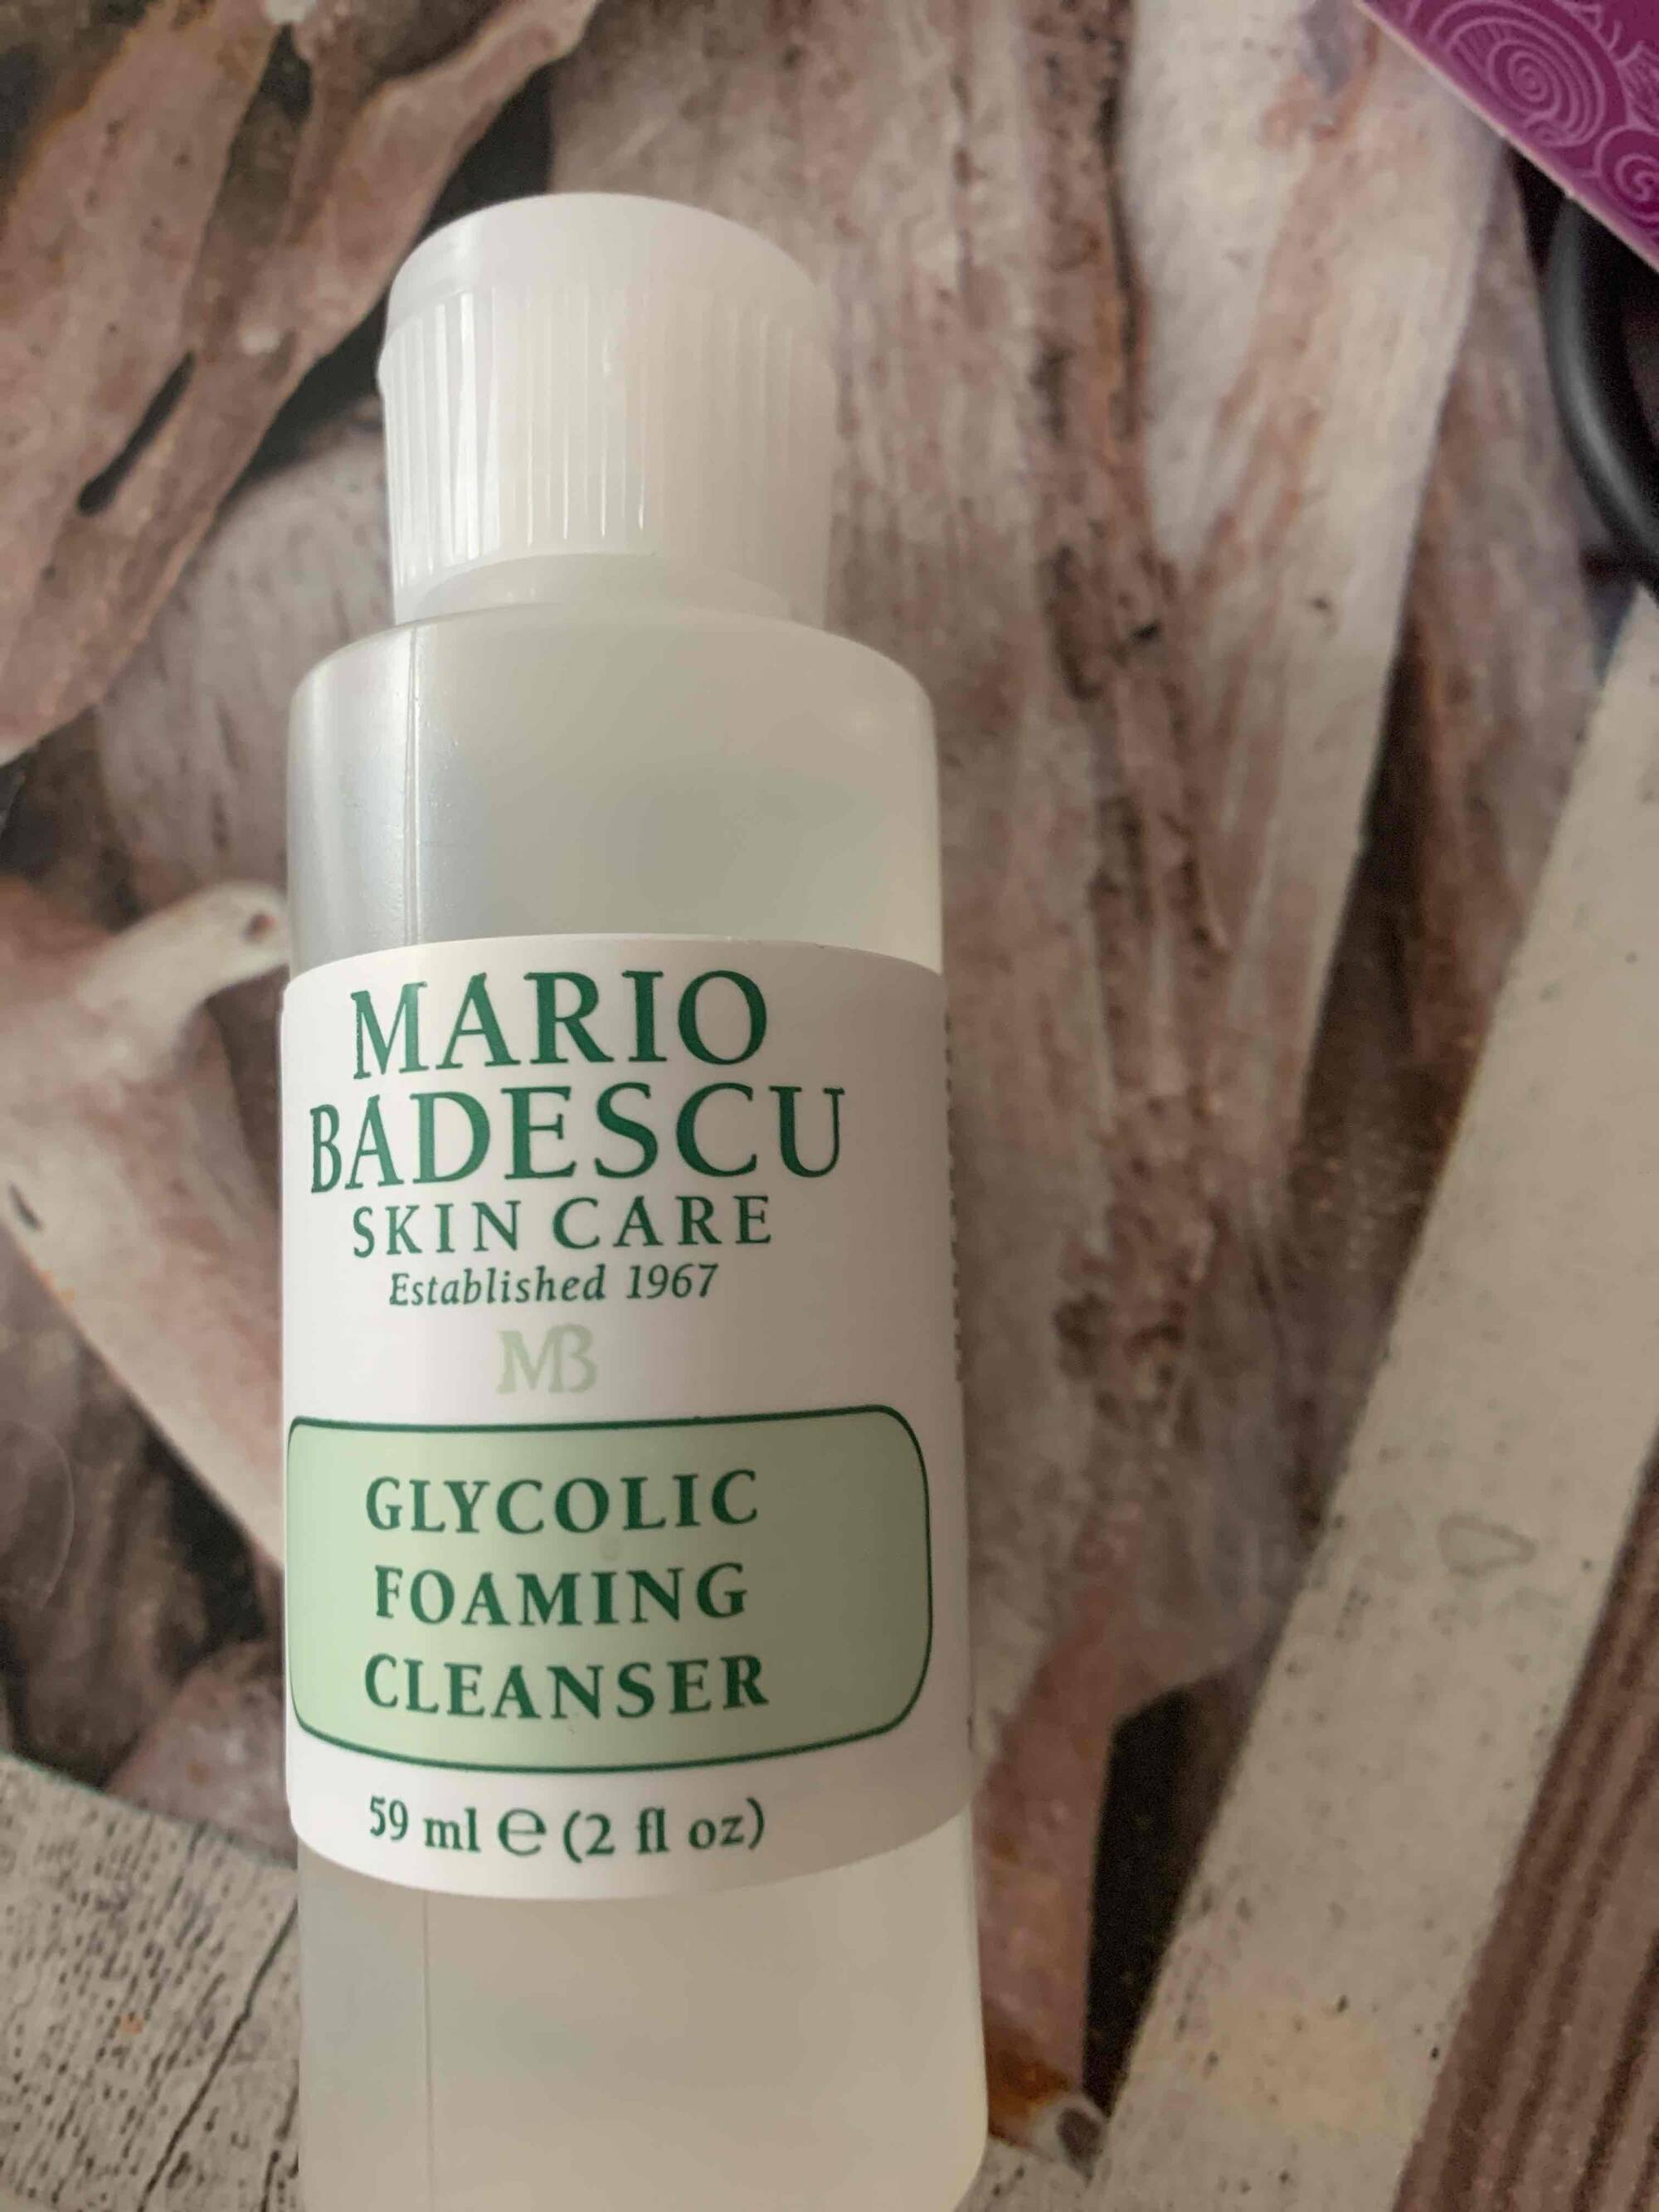 MARIO BADESCU - Glycolic foaming cleanser